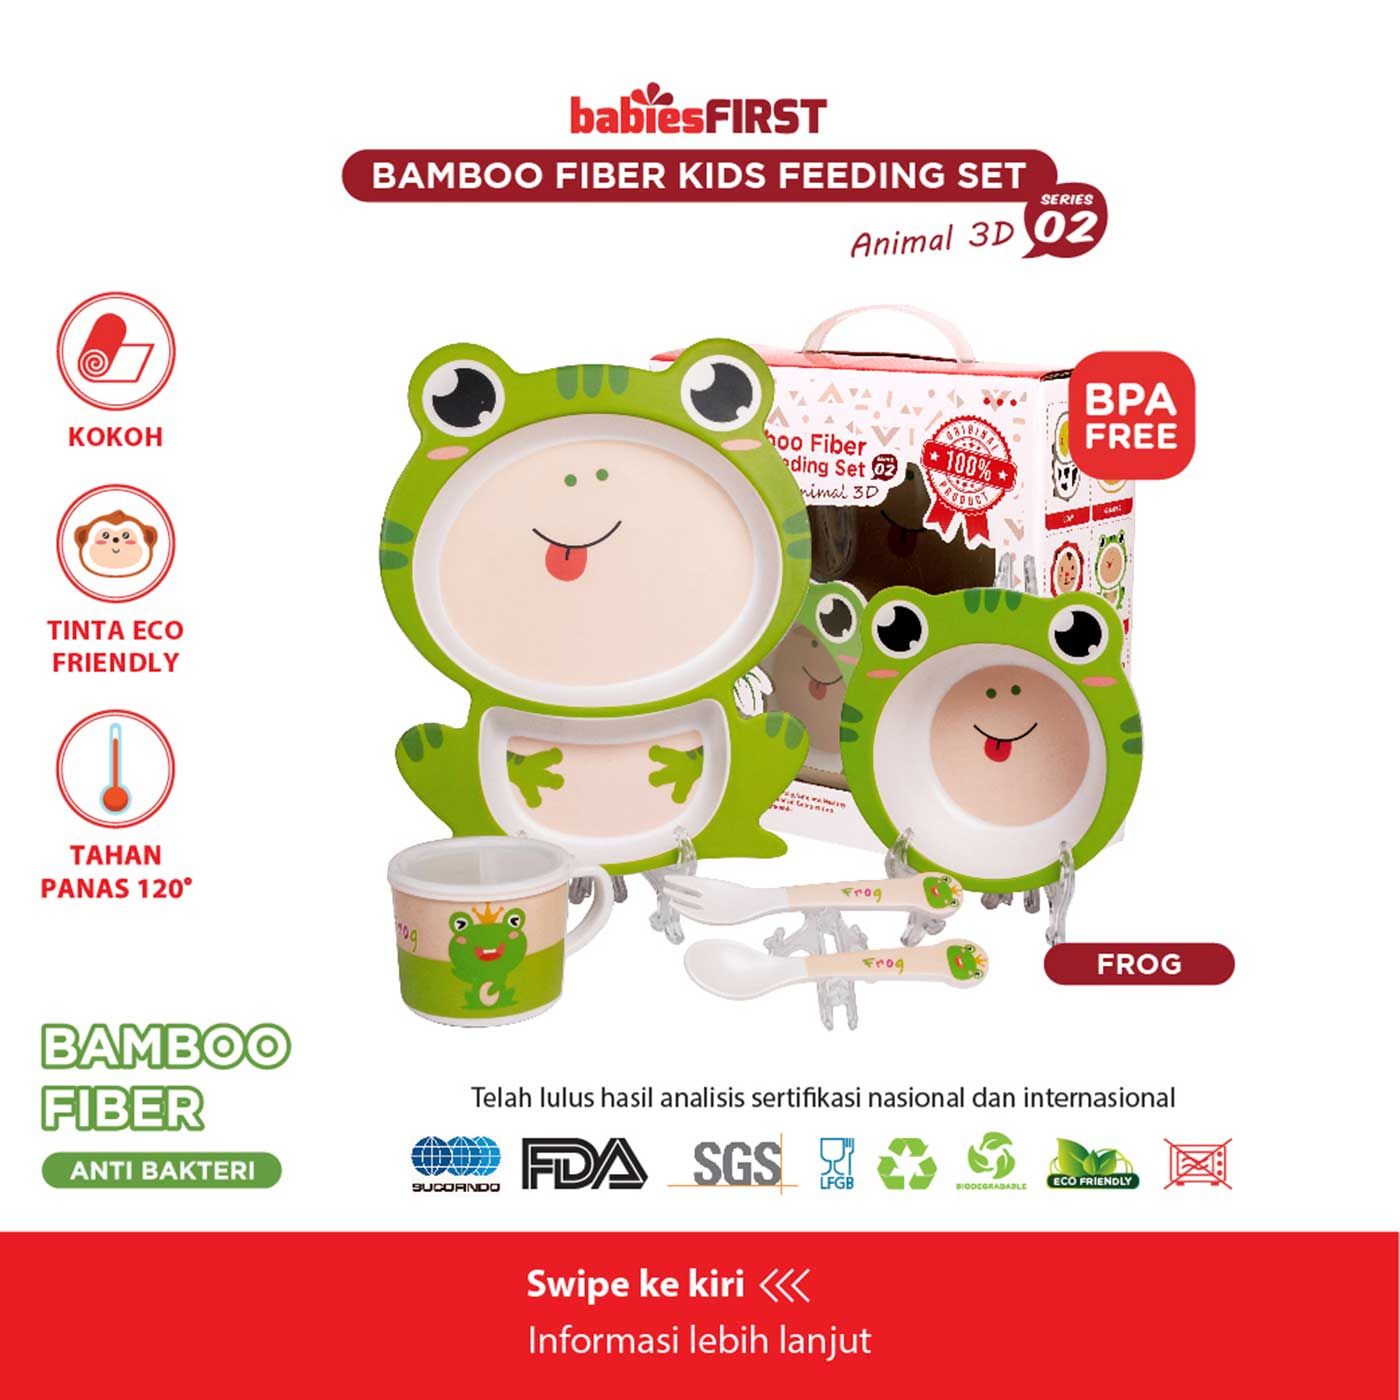 Babiesfirst Bamboo Fiber Kids Feeding Set Animal 3D Frog - 1